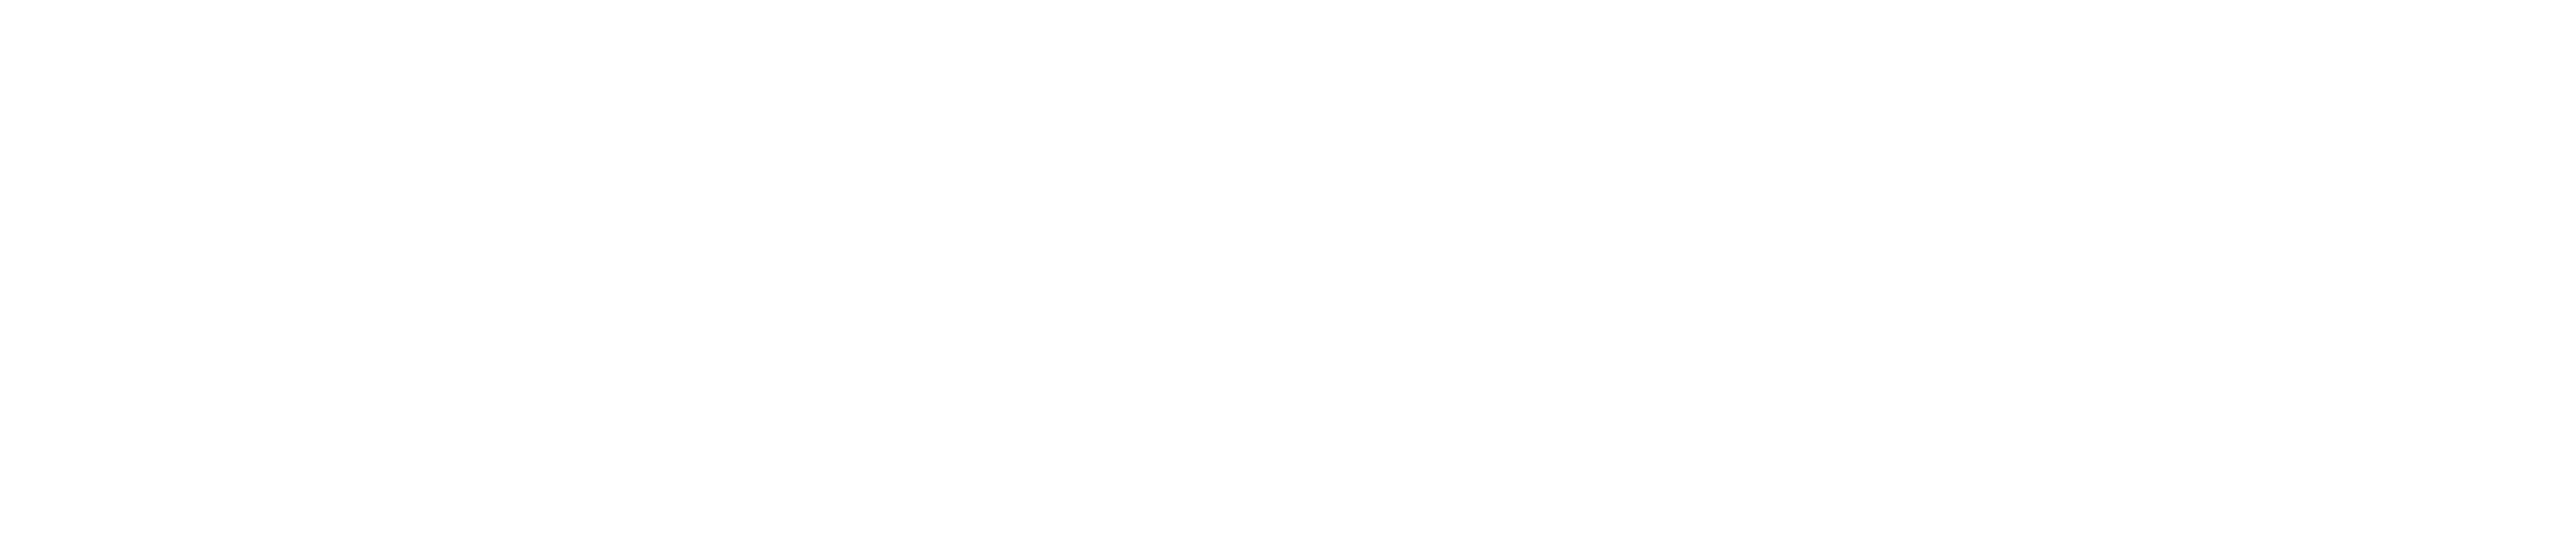 warrcloud logo